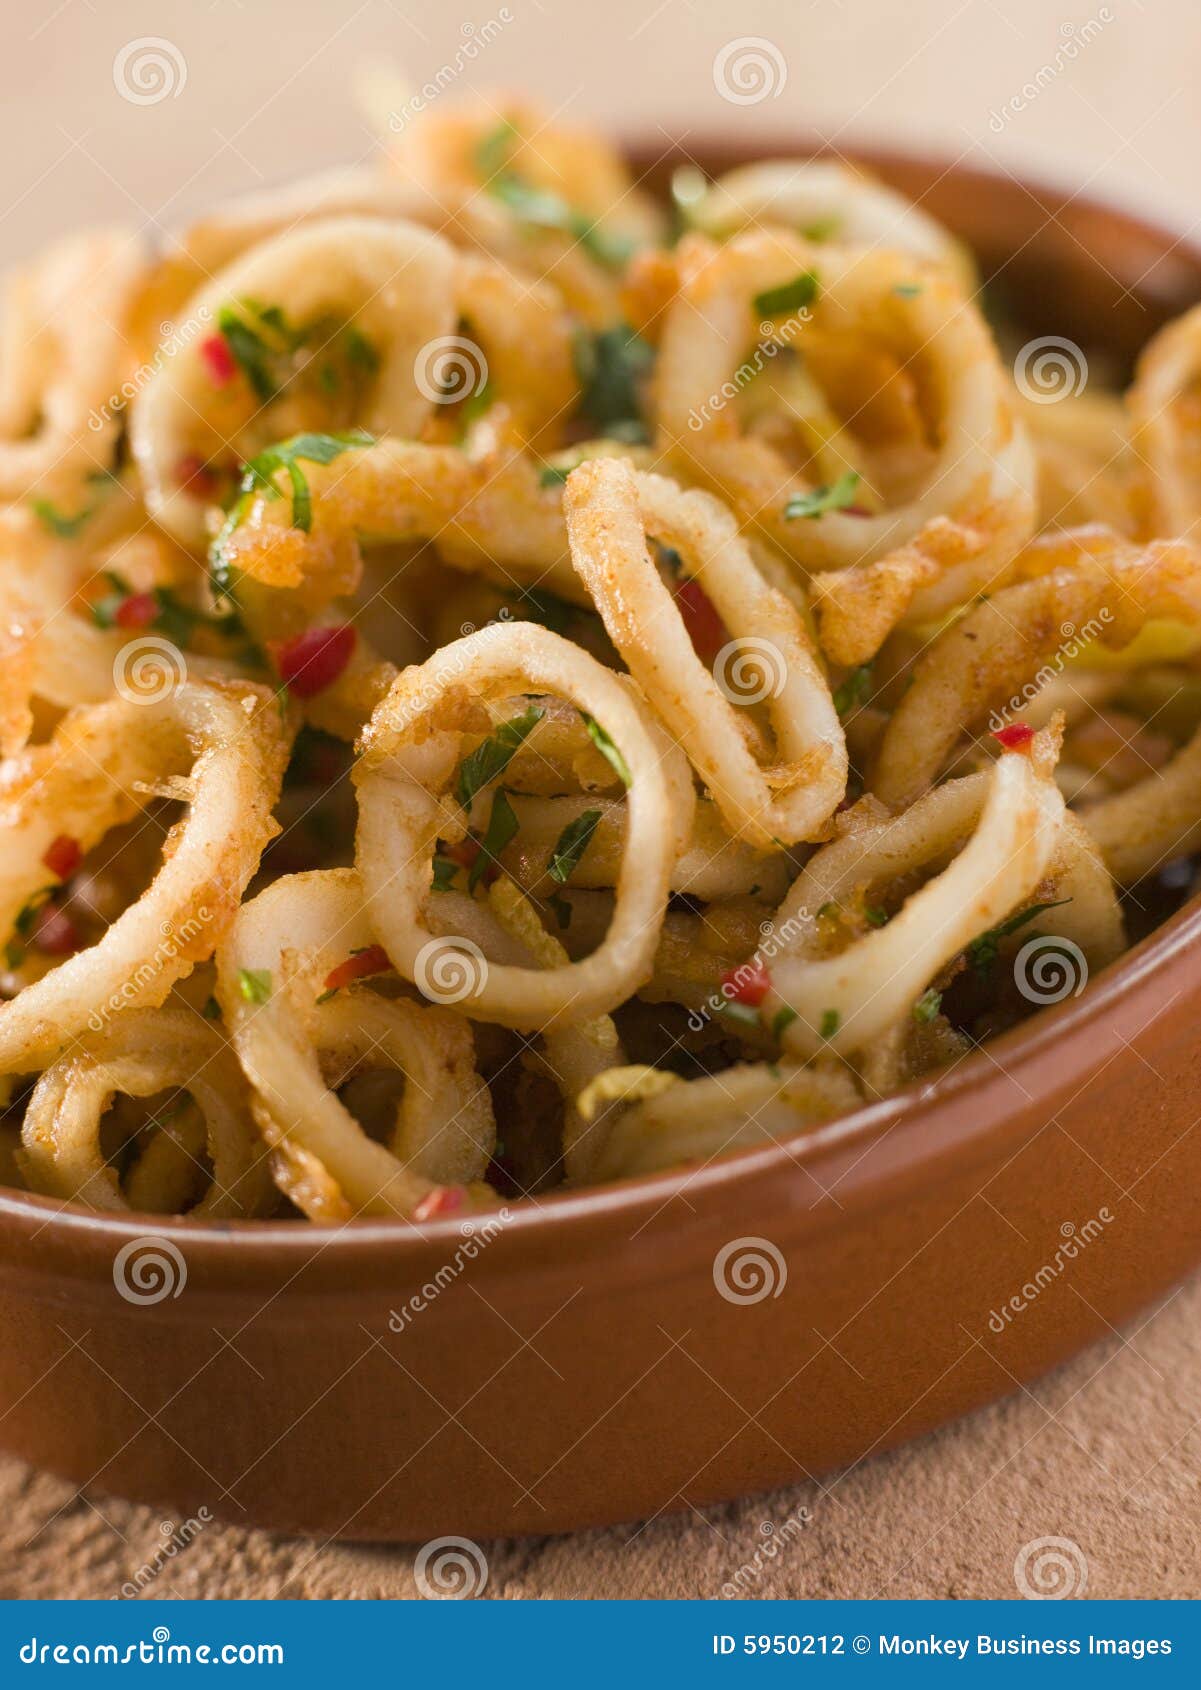 calameres frito- deep fried squid rings